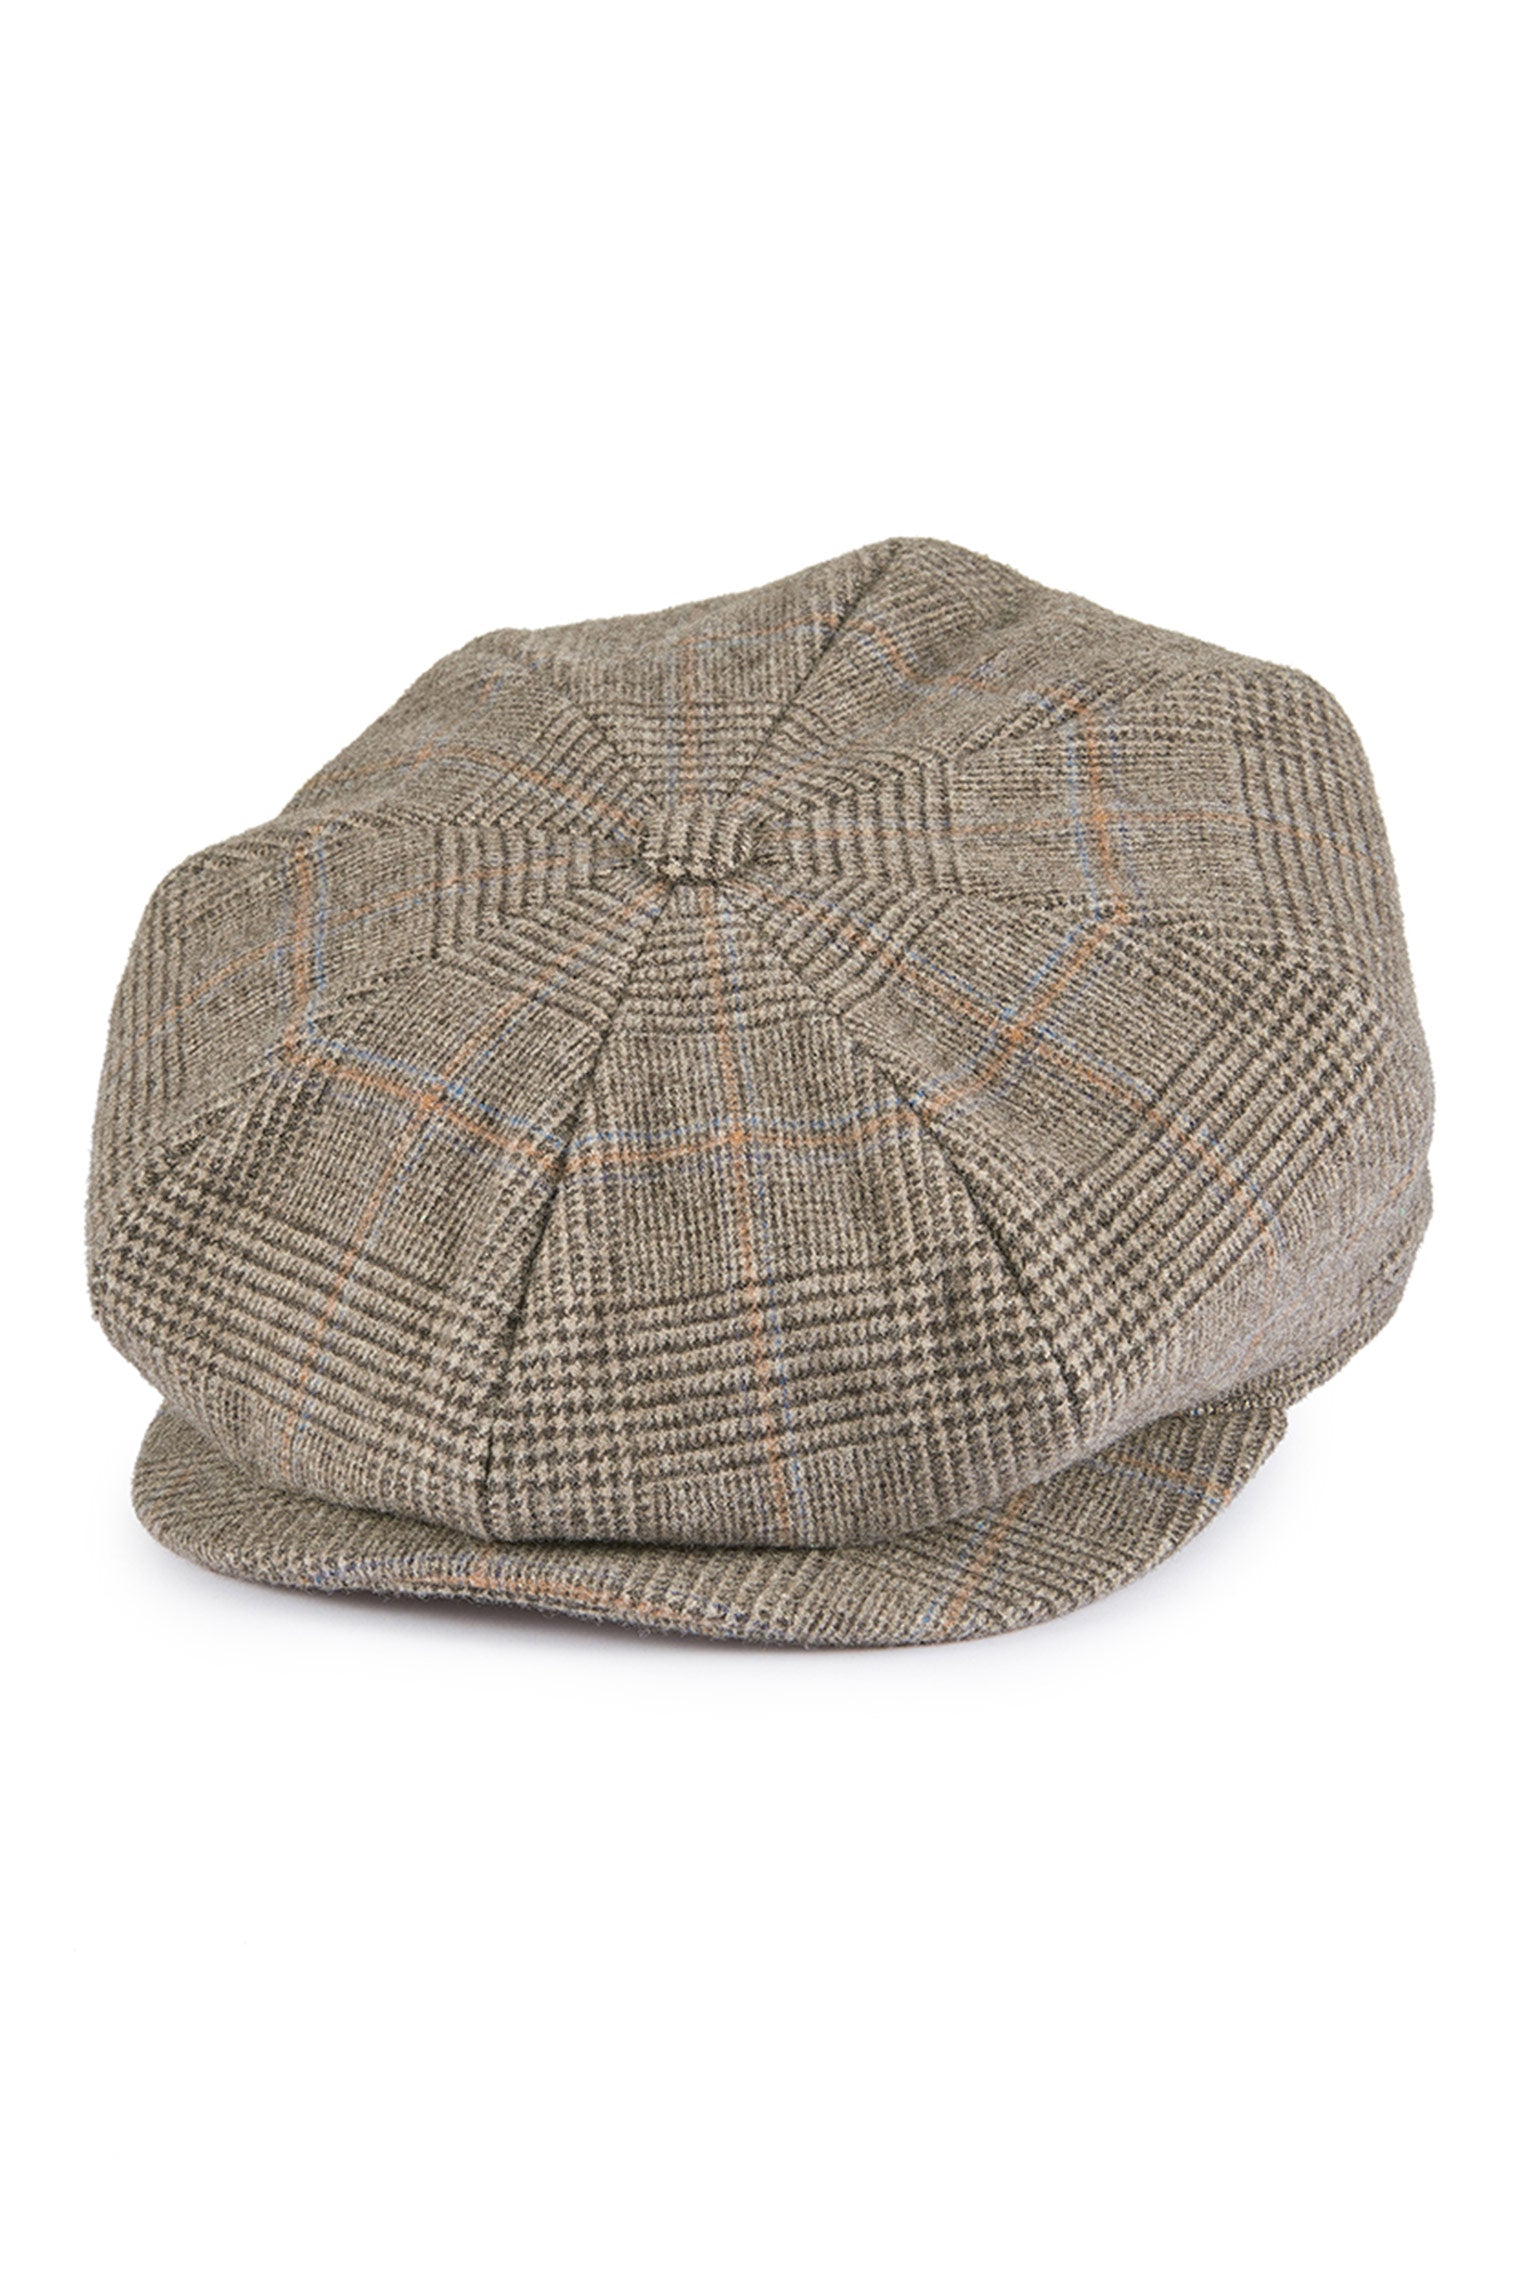 Escorial Wool Tremelo Bakerboy Cap - Bakerboy Caps - Lock & Co. Hatters London UK